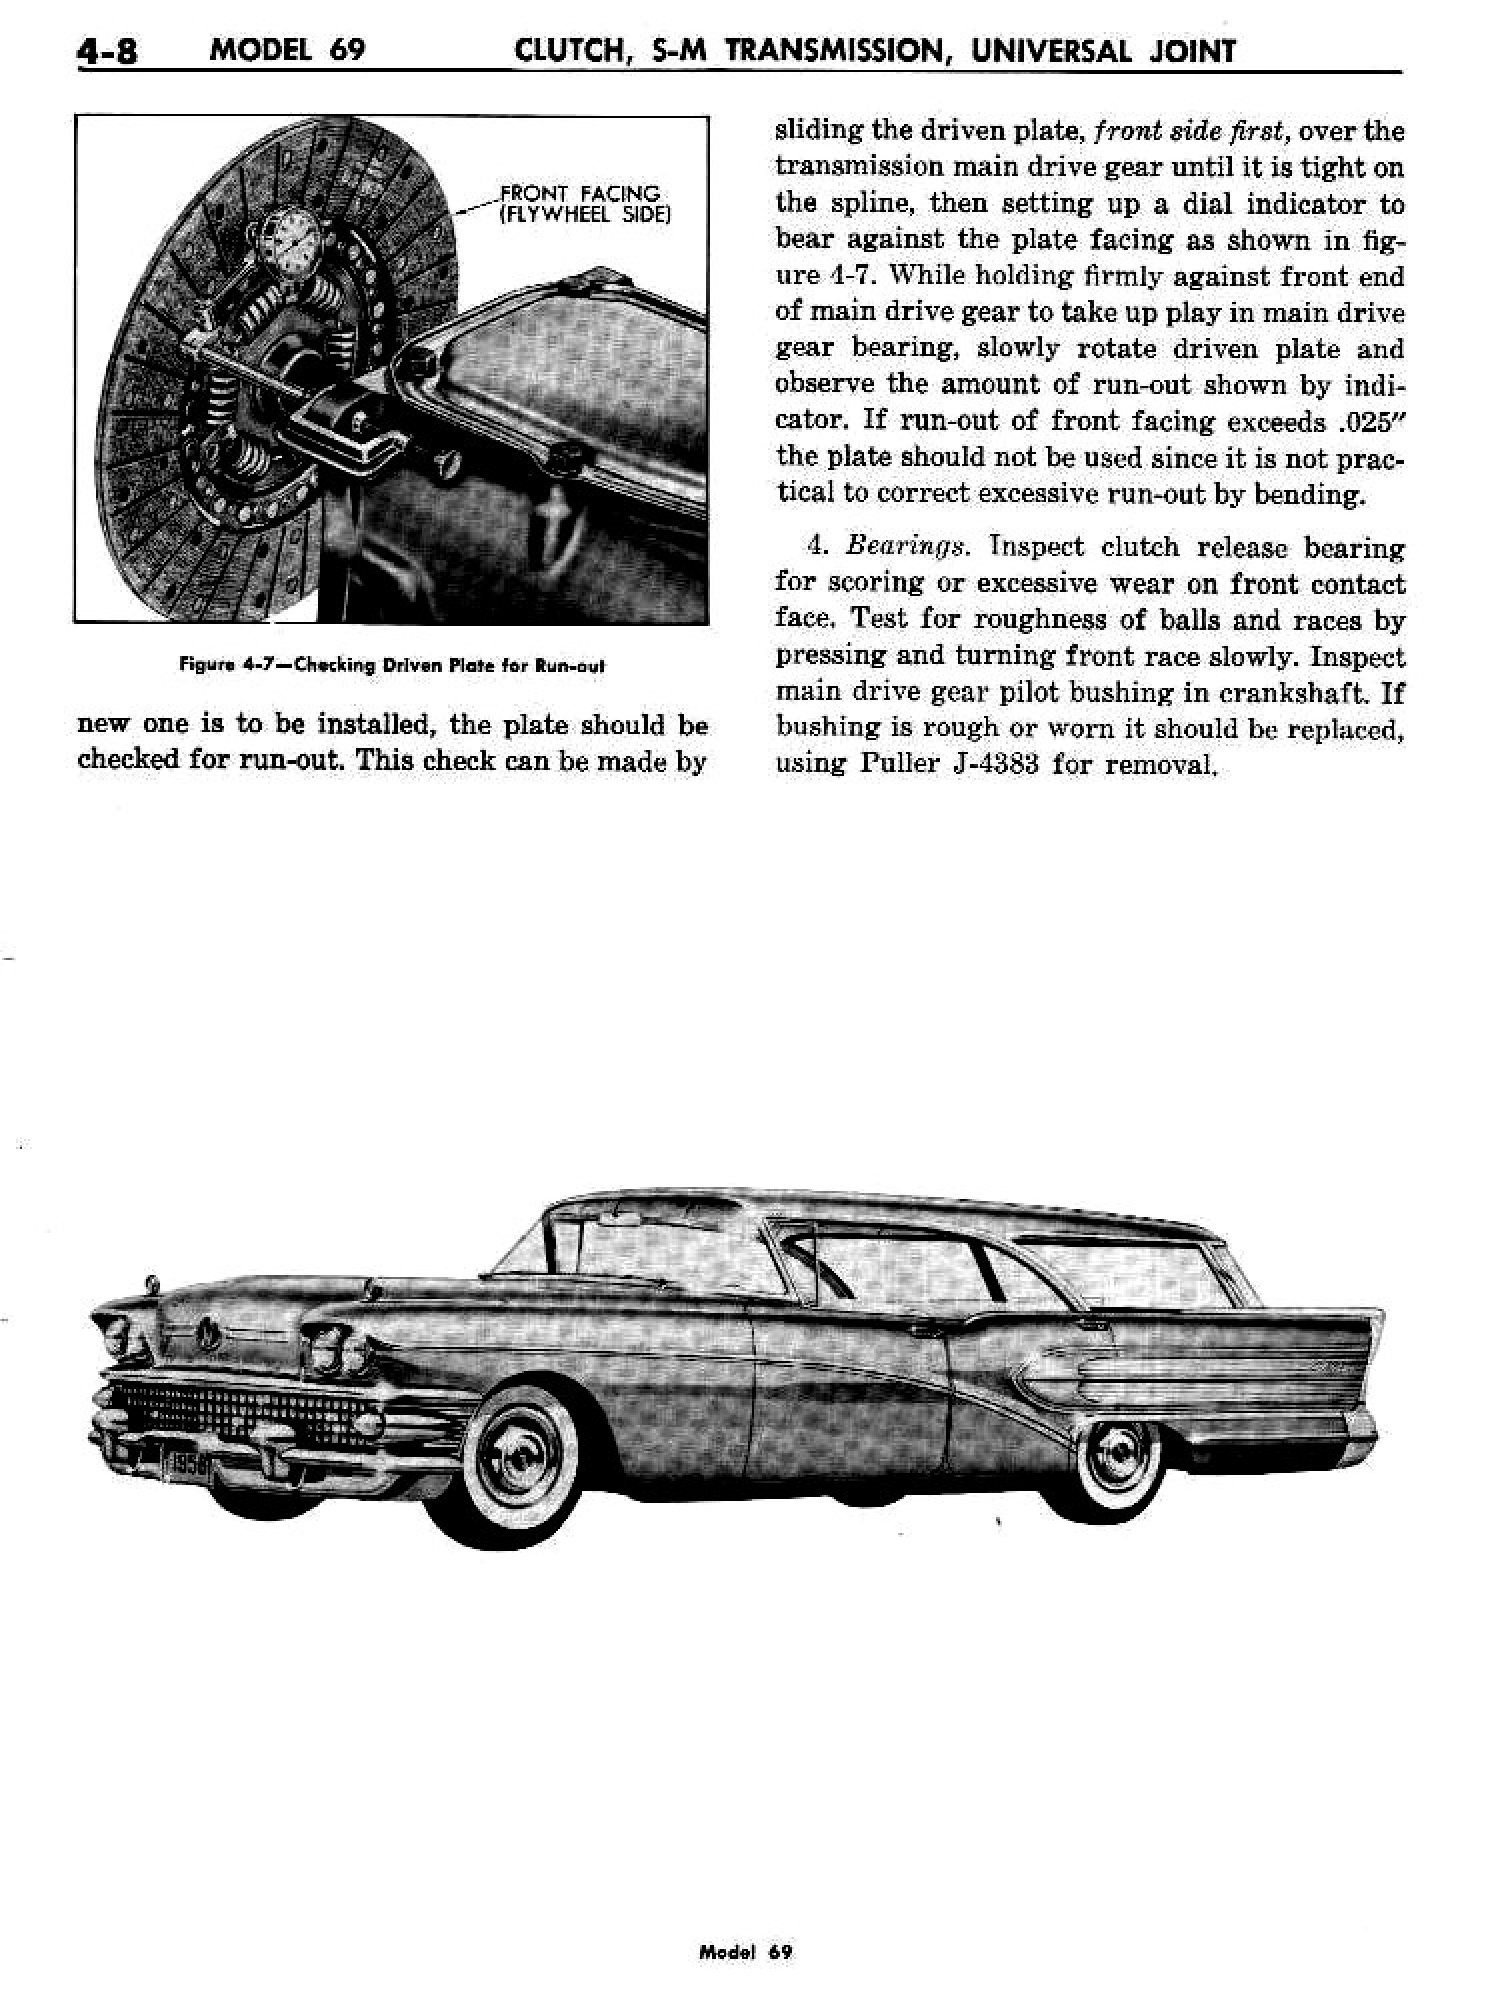 n_05 1958 Buick Shop Manual - Clutch & Man Trans_8.jpg